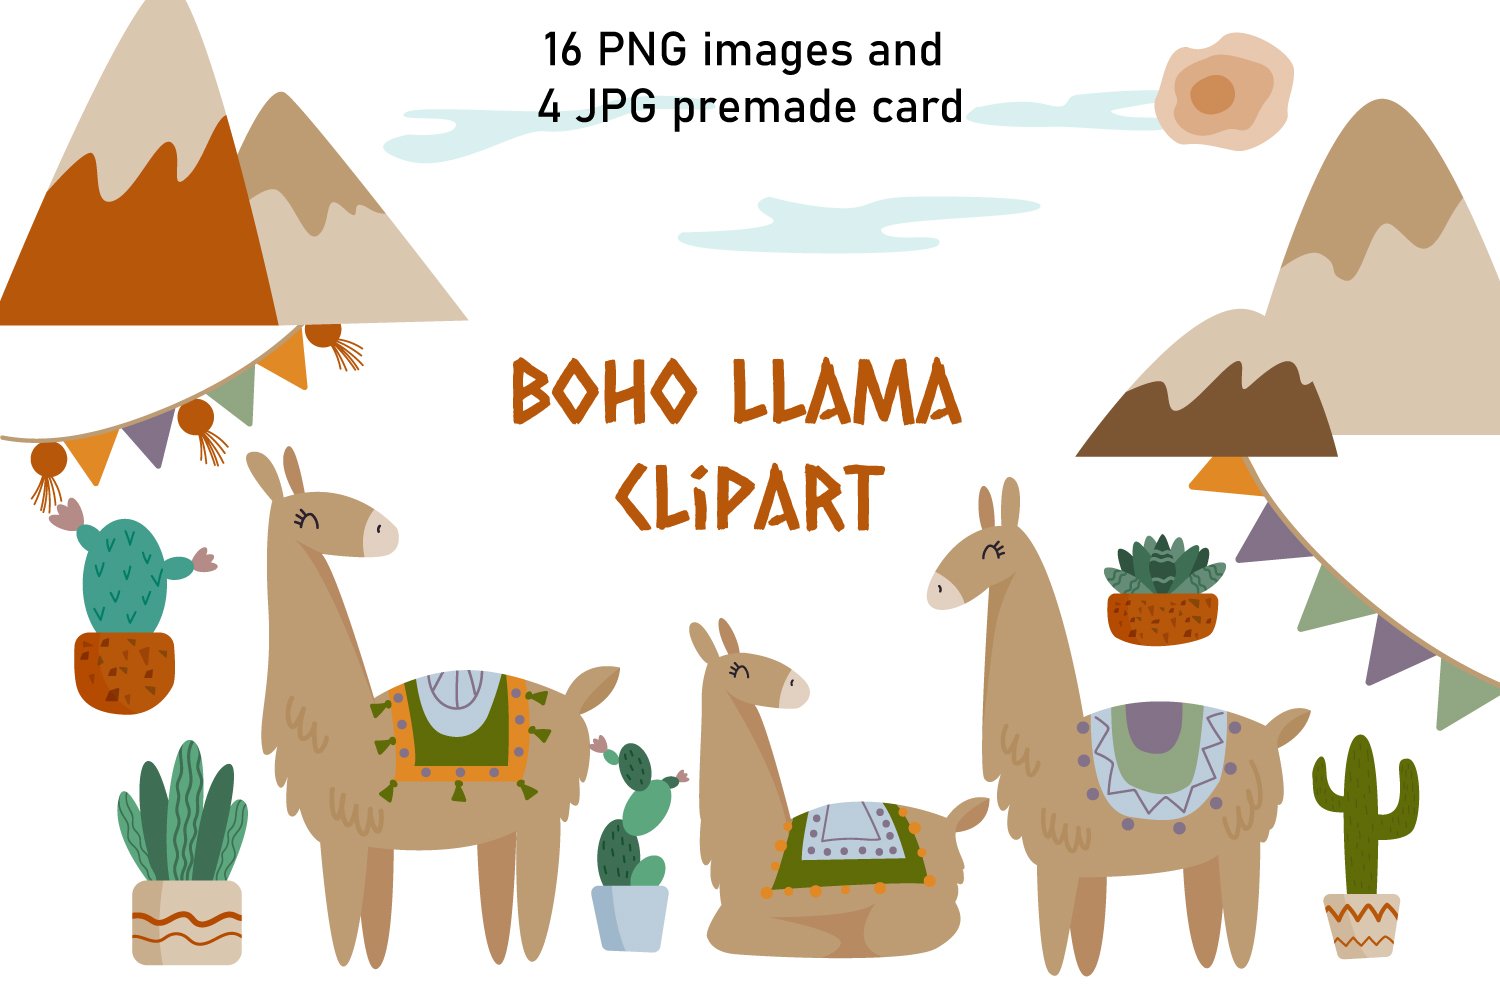 Boho llama clipart and pattern cover image.